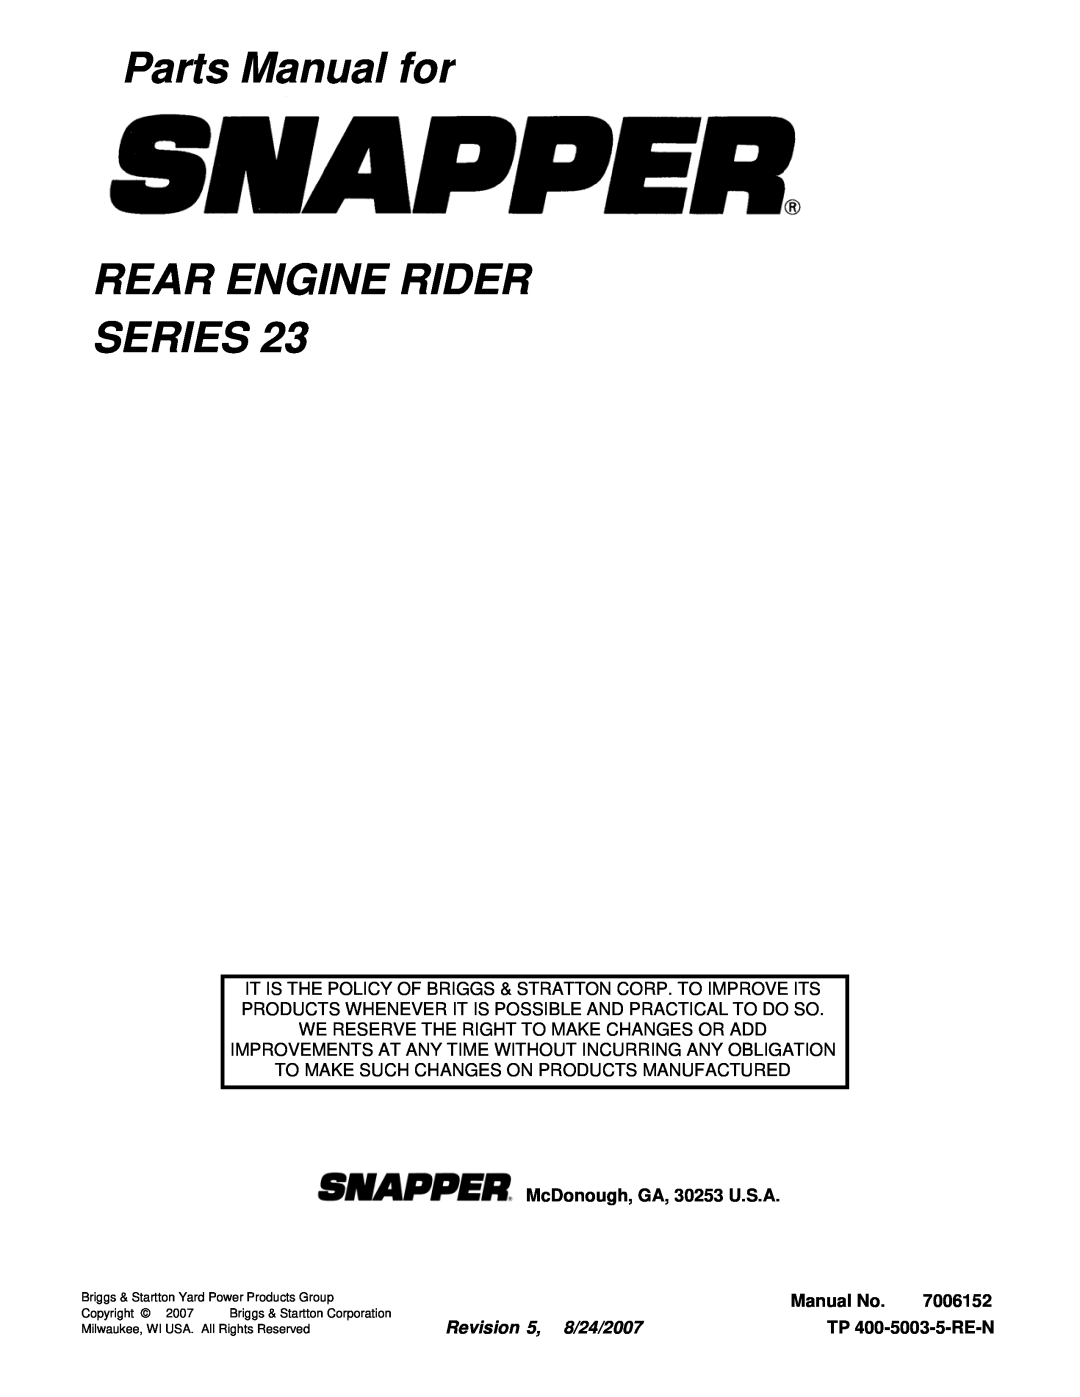 Snapper 2813523BVE (7085624) Parts Manual for REAR ENGINE RIDER SERIES, McDonough, GA, 30253 U.S.A, Manual No, 7006152 